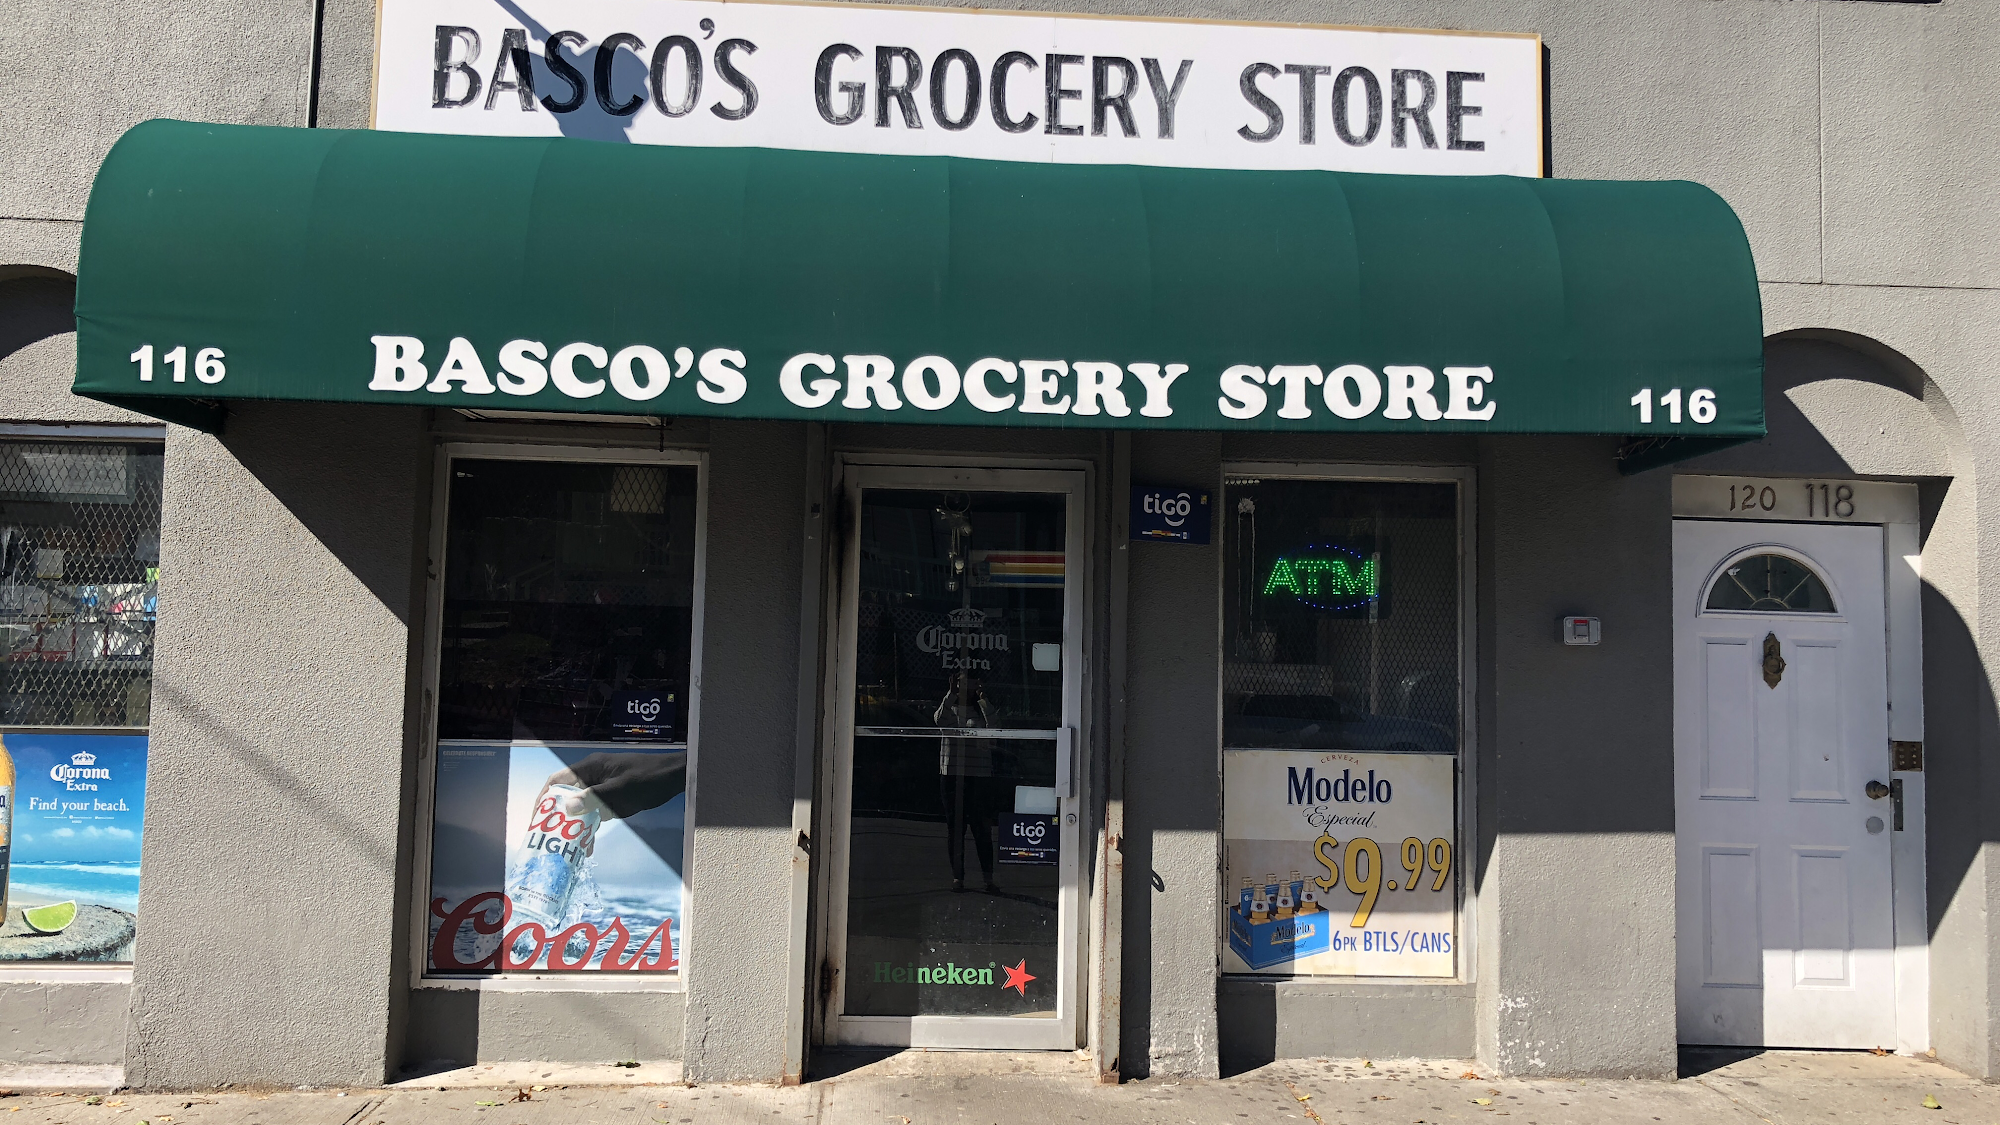 Basco's Grocery Store